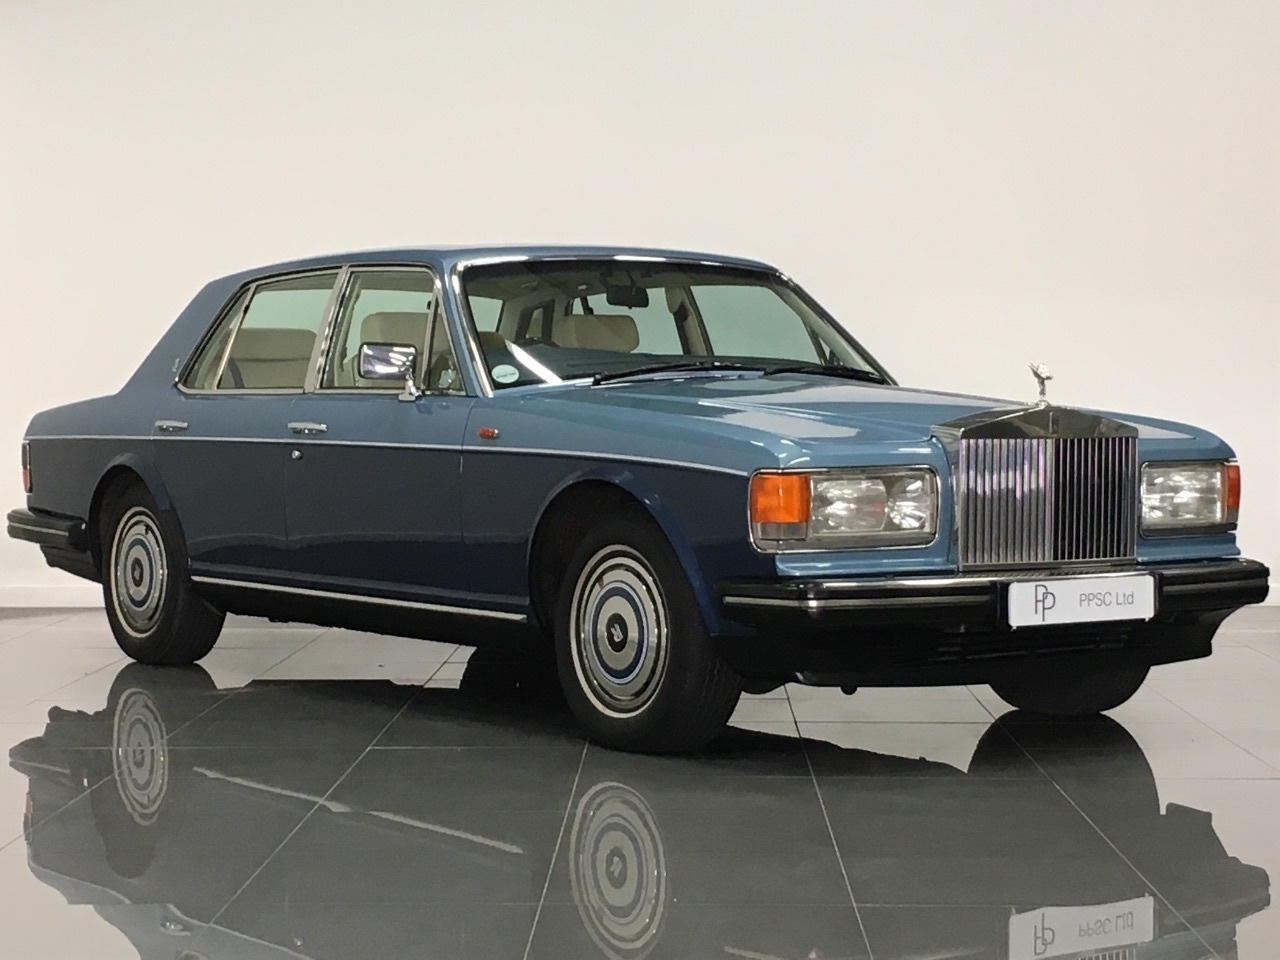 1989 Rolls Royce Silver Spirit